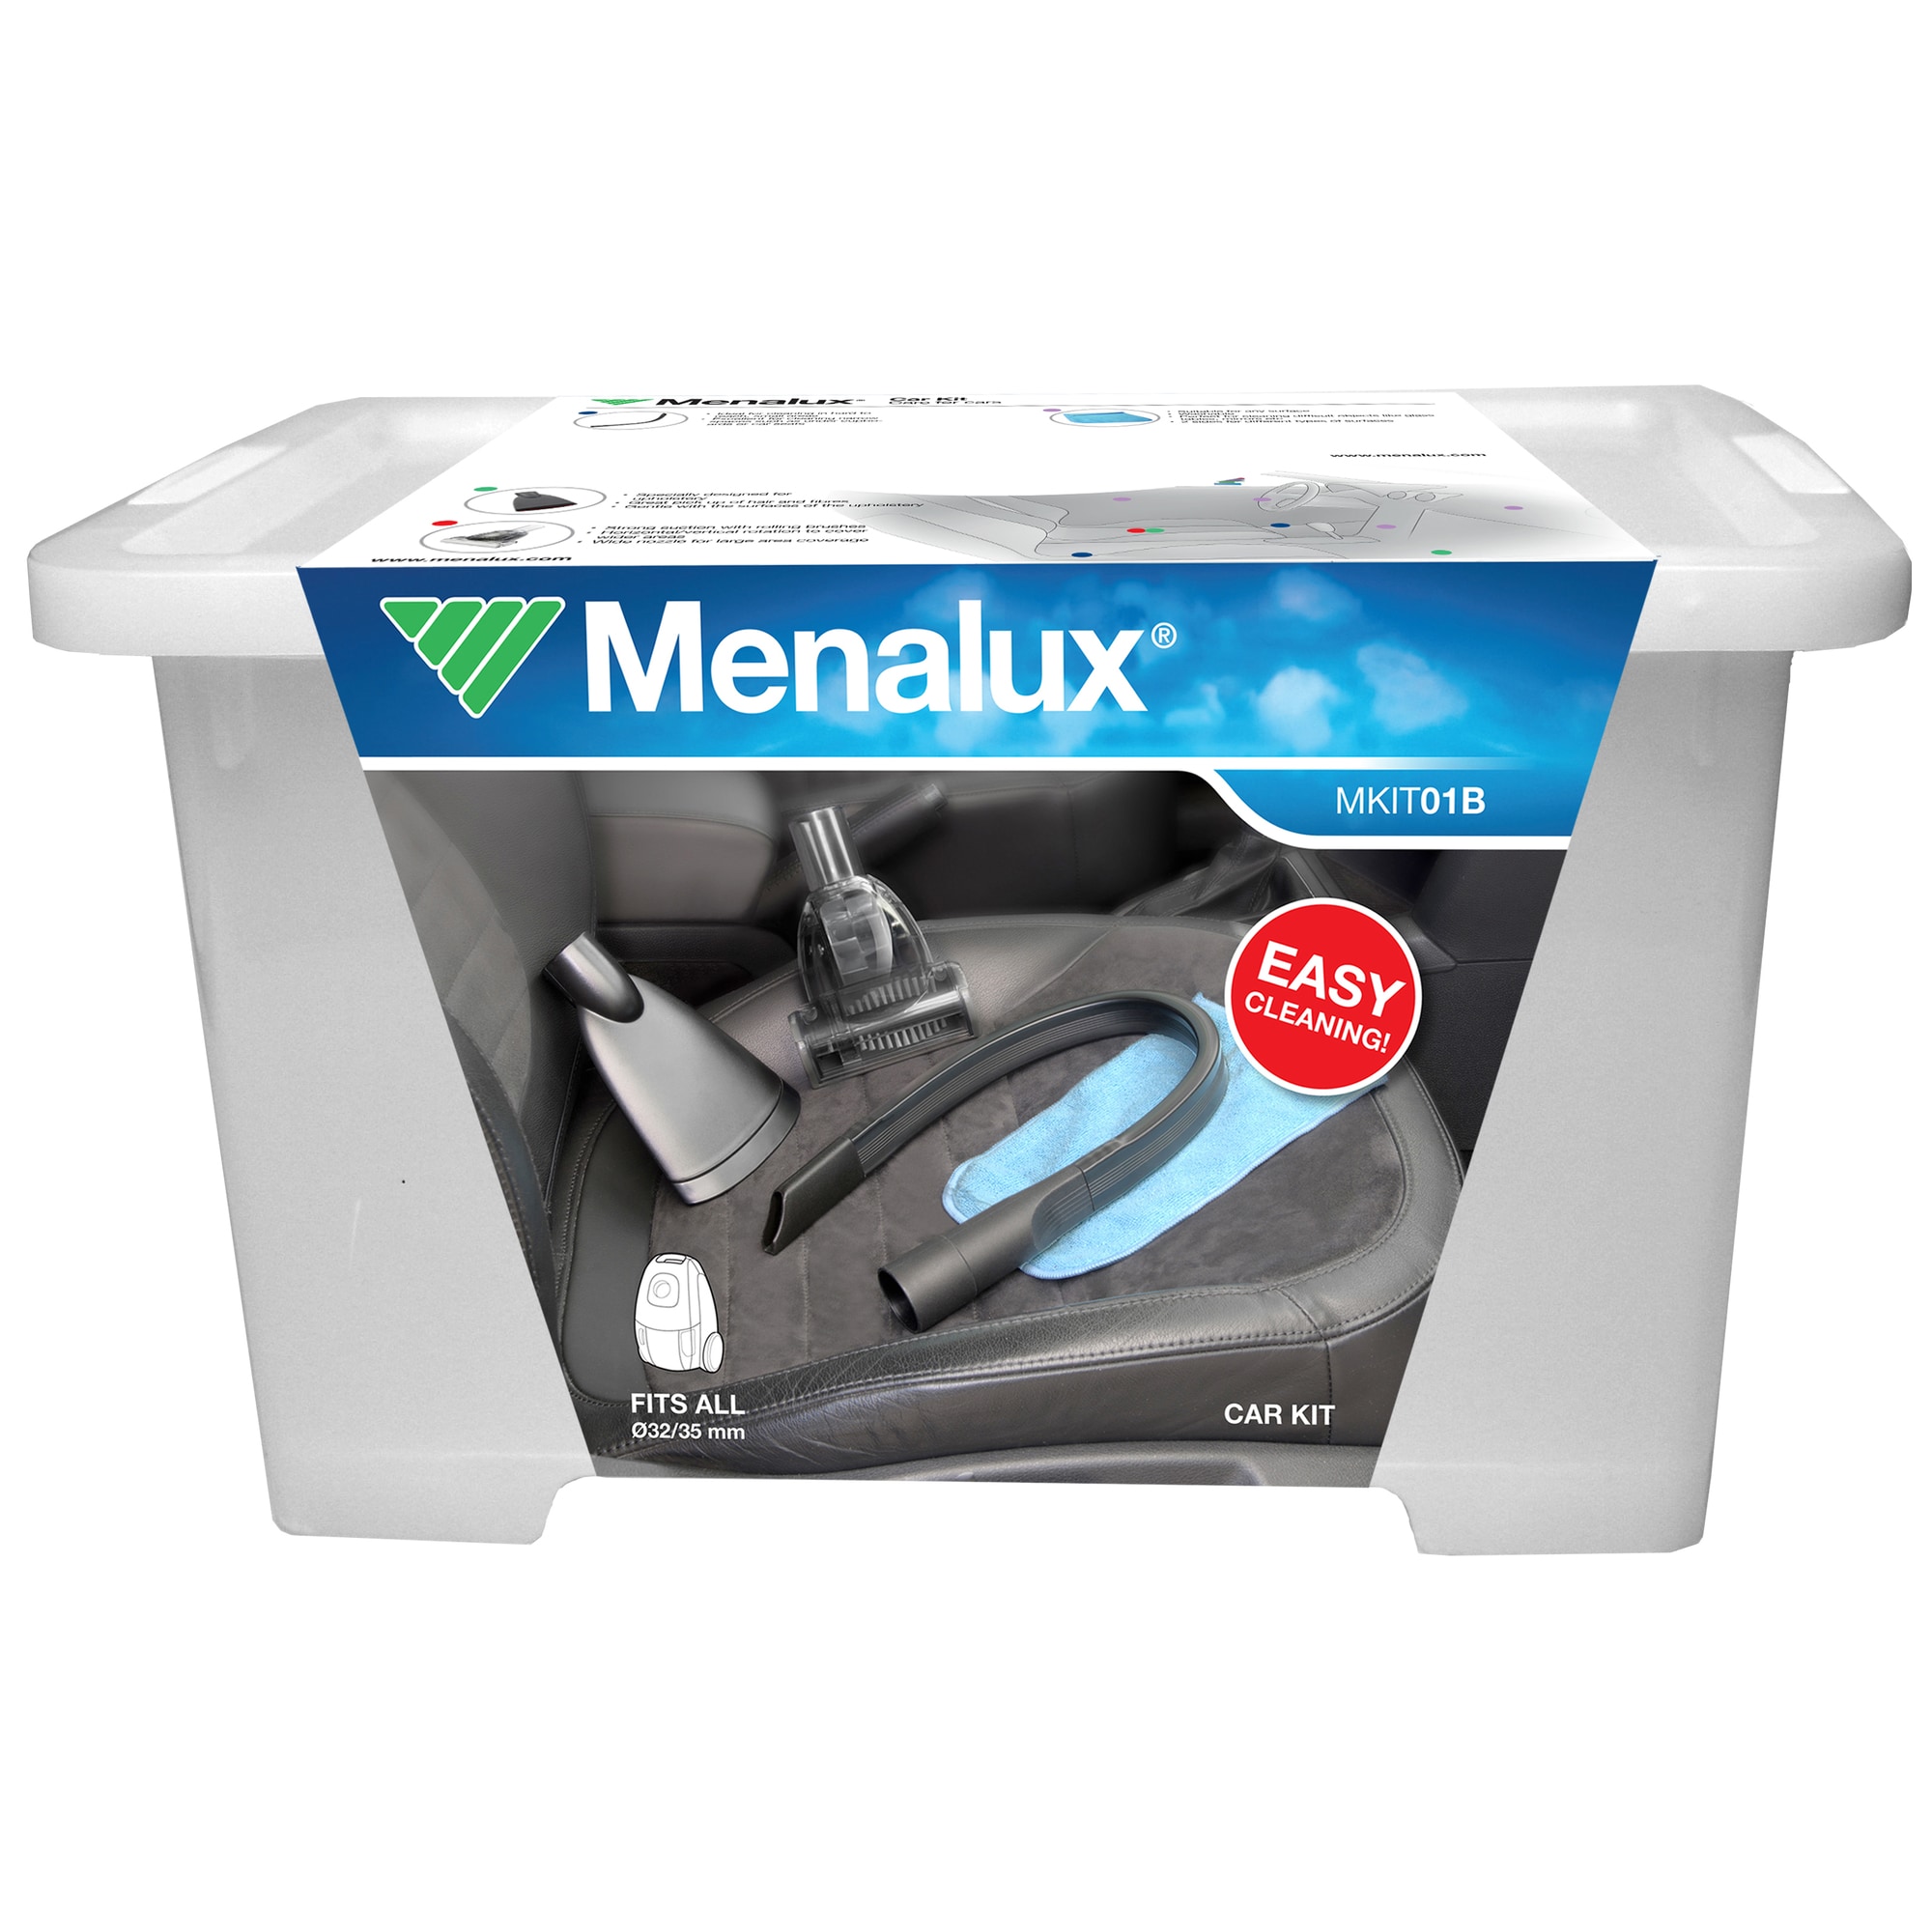 Menalux Auto Care støvsugersett til bil MKIT01B - Munnstykker til støvsuger  og annet tilbehør - Elkjøp